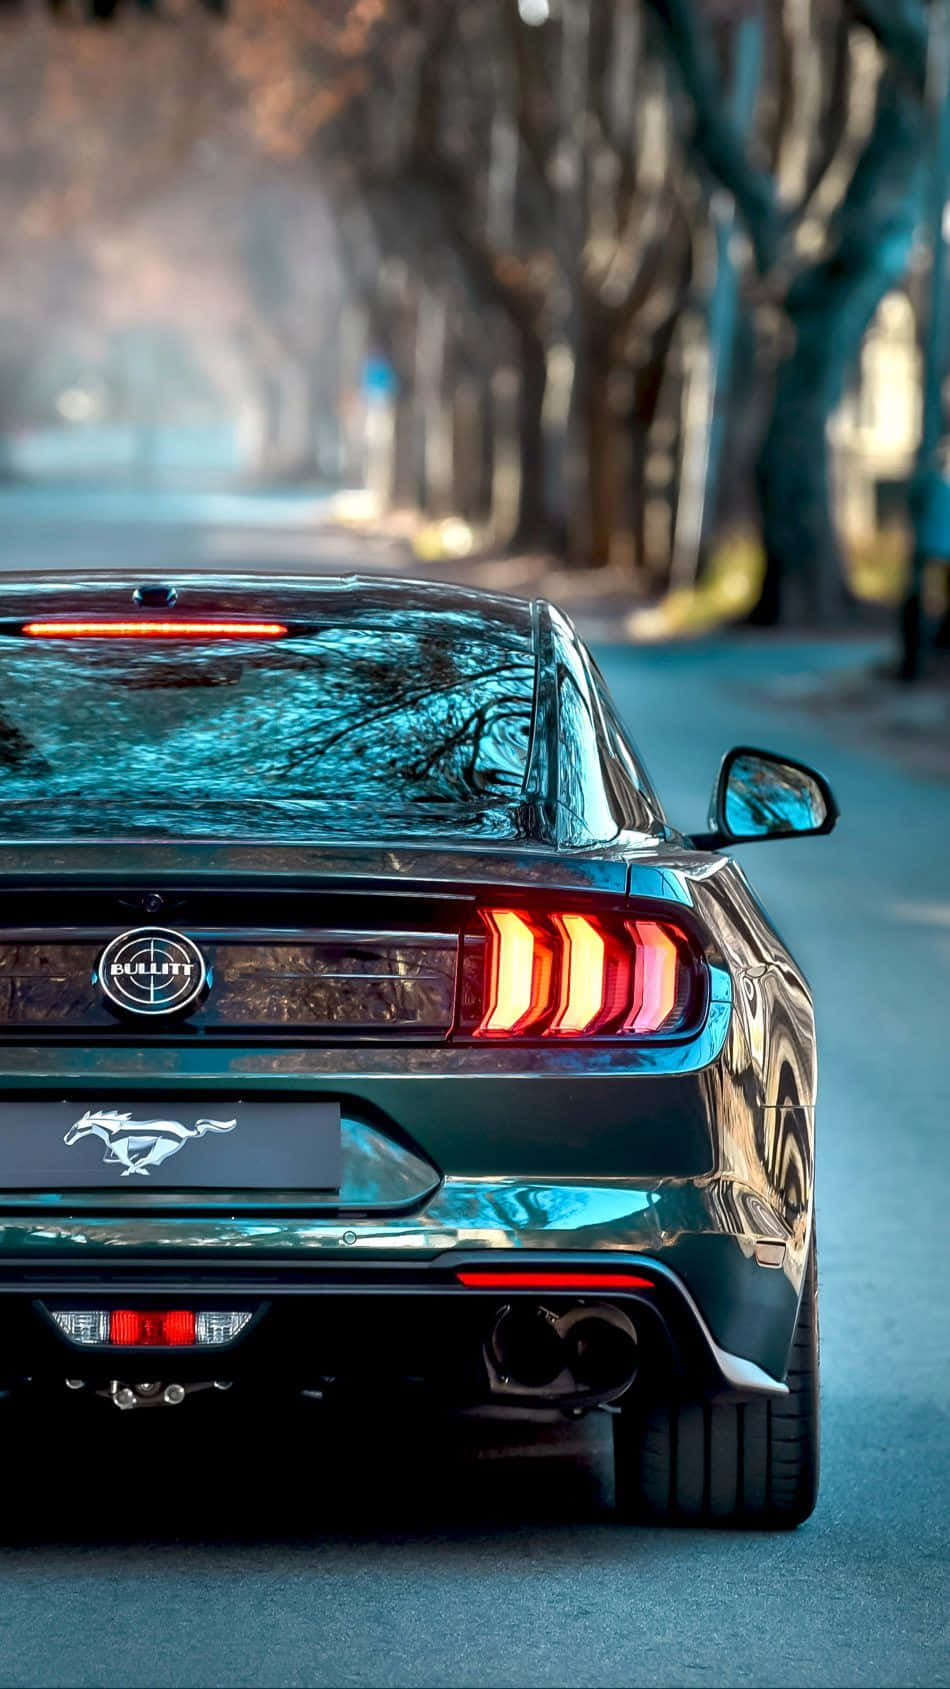 Ford Mustang 2019 Bullitt Sports Car Model Wallpaper